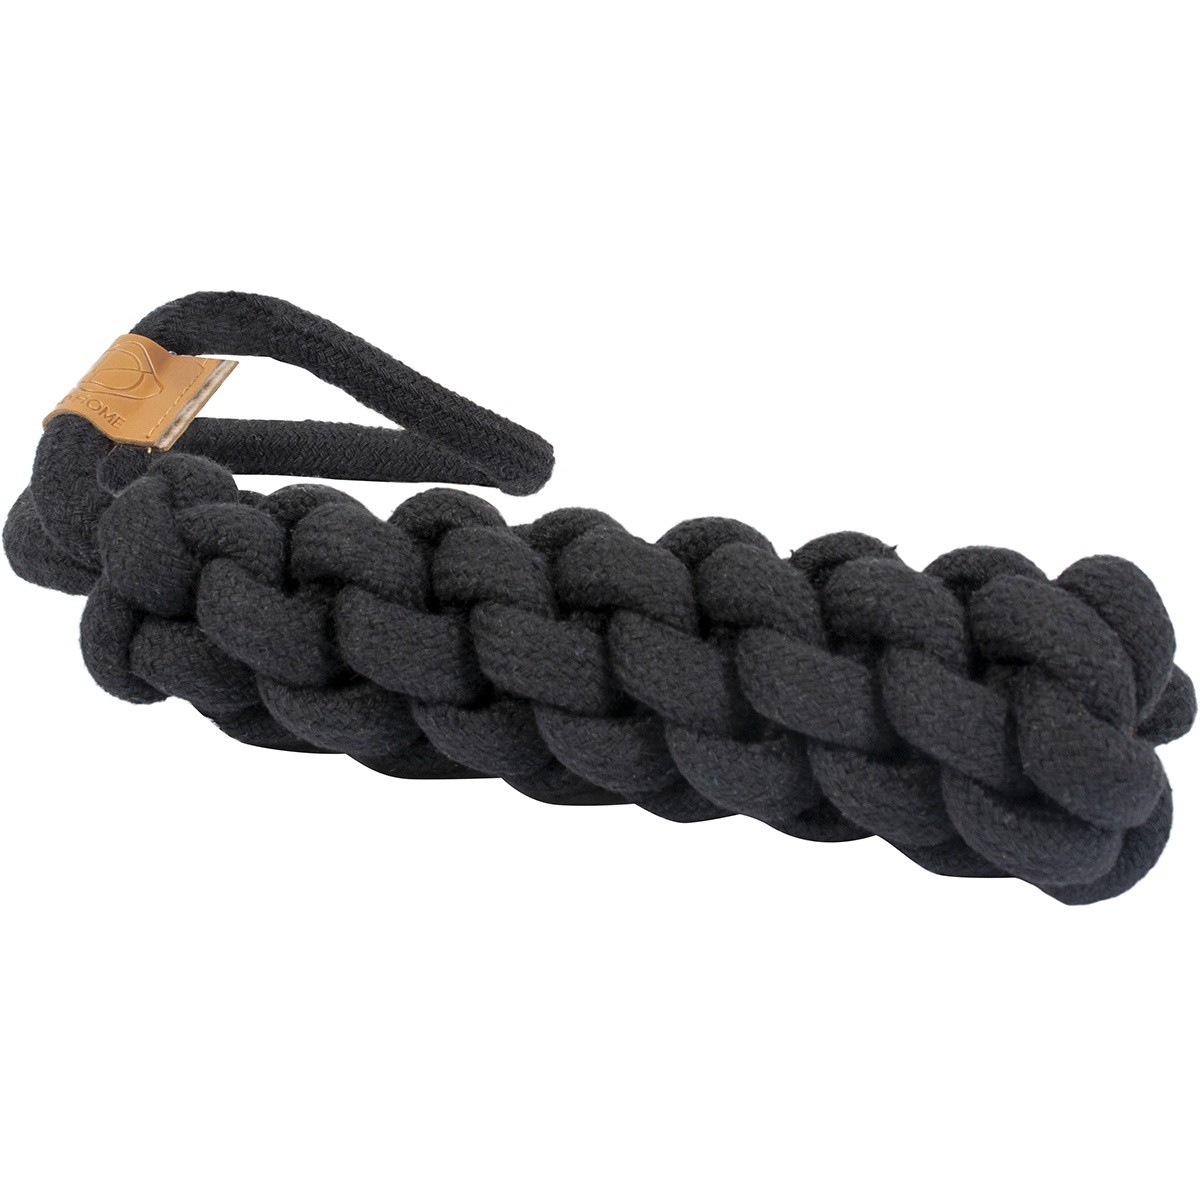   Rope Toys, Kurt XS, Ø 5 x L 20 cm, noir  5x20cm